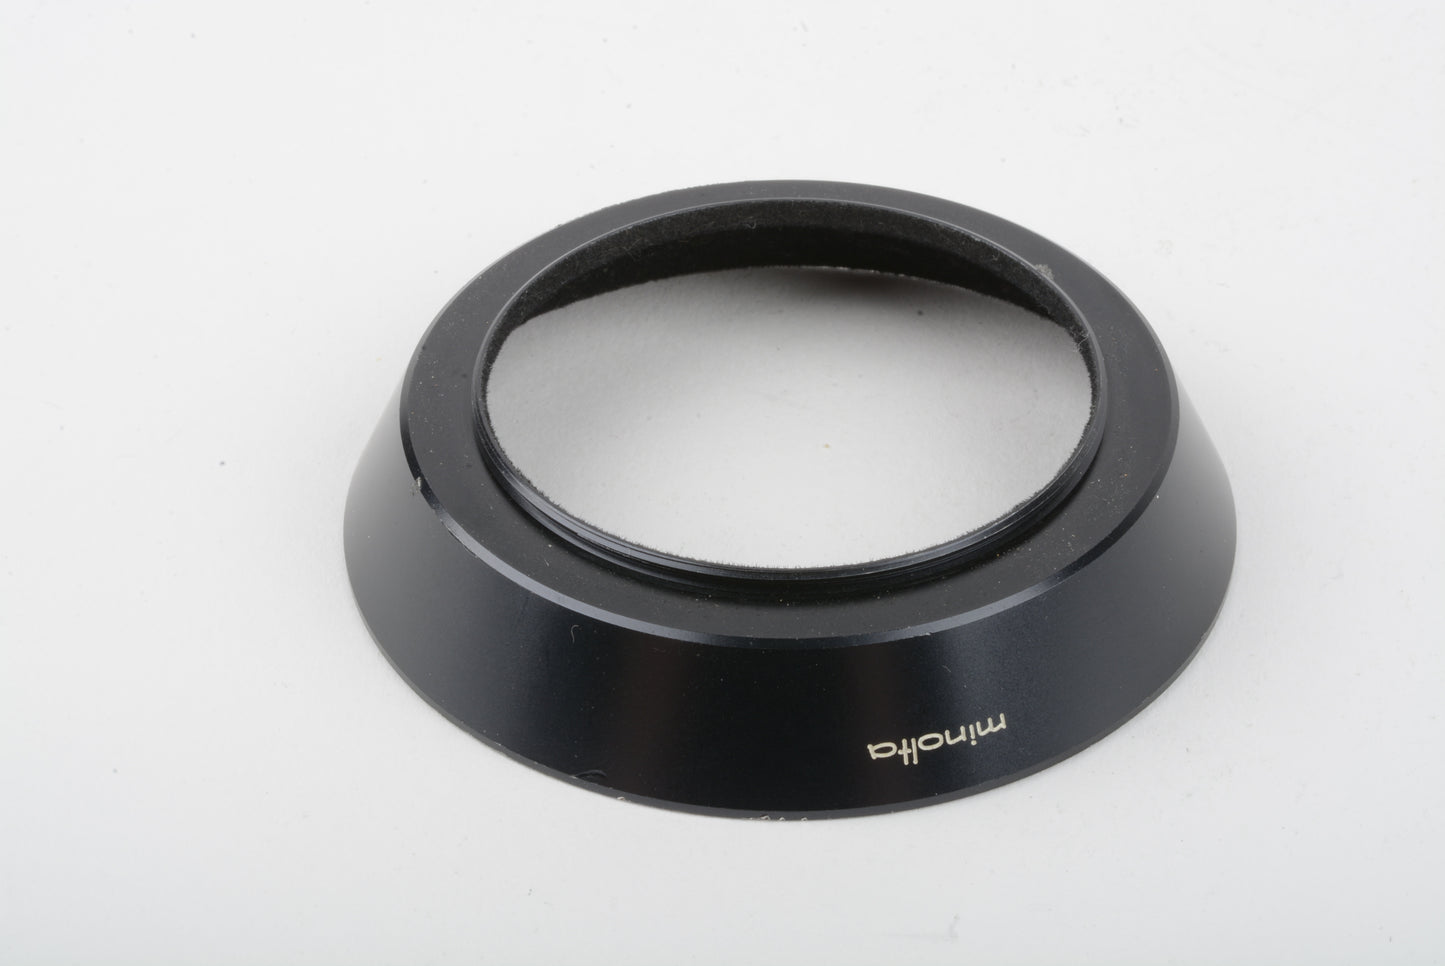 Minolta metal lens hood for 24mm f2.8 MD lens, very clean